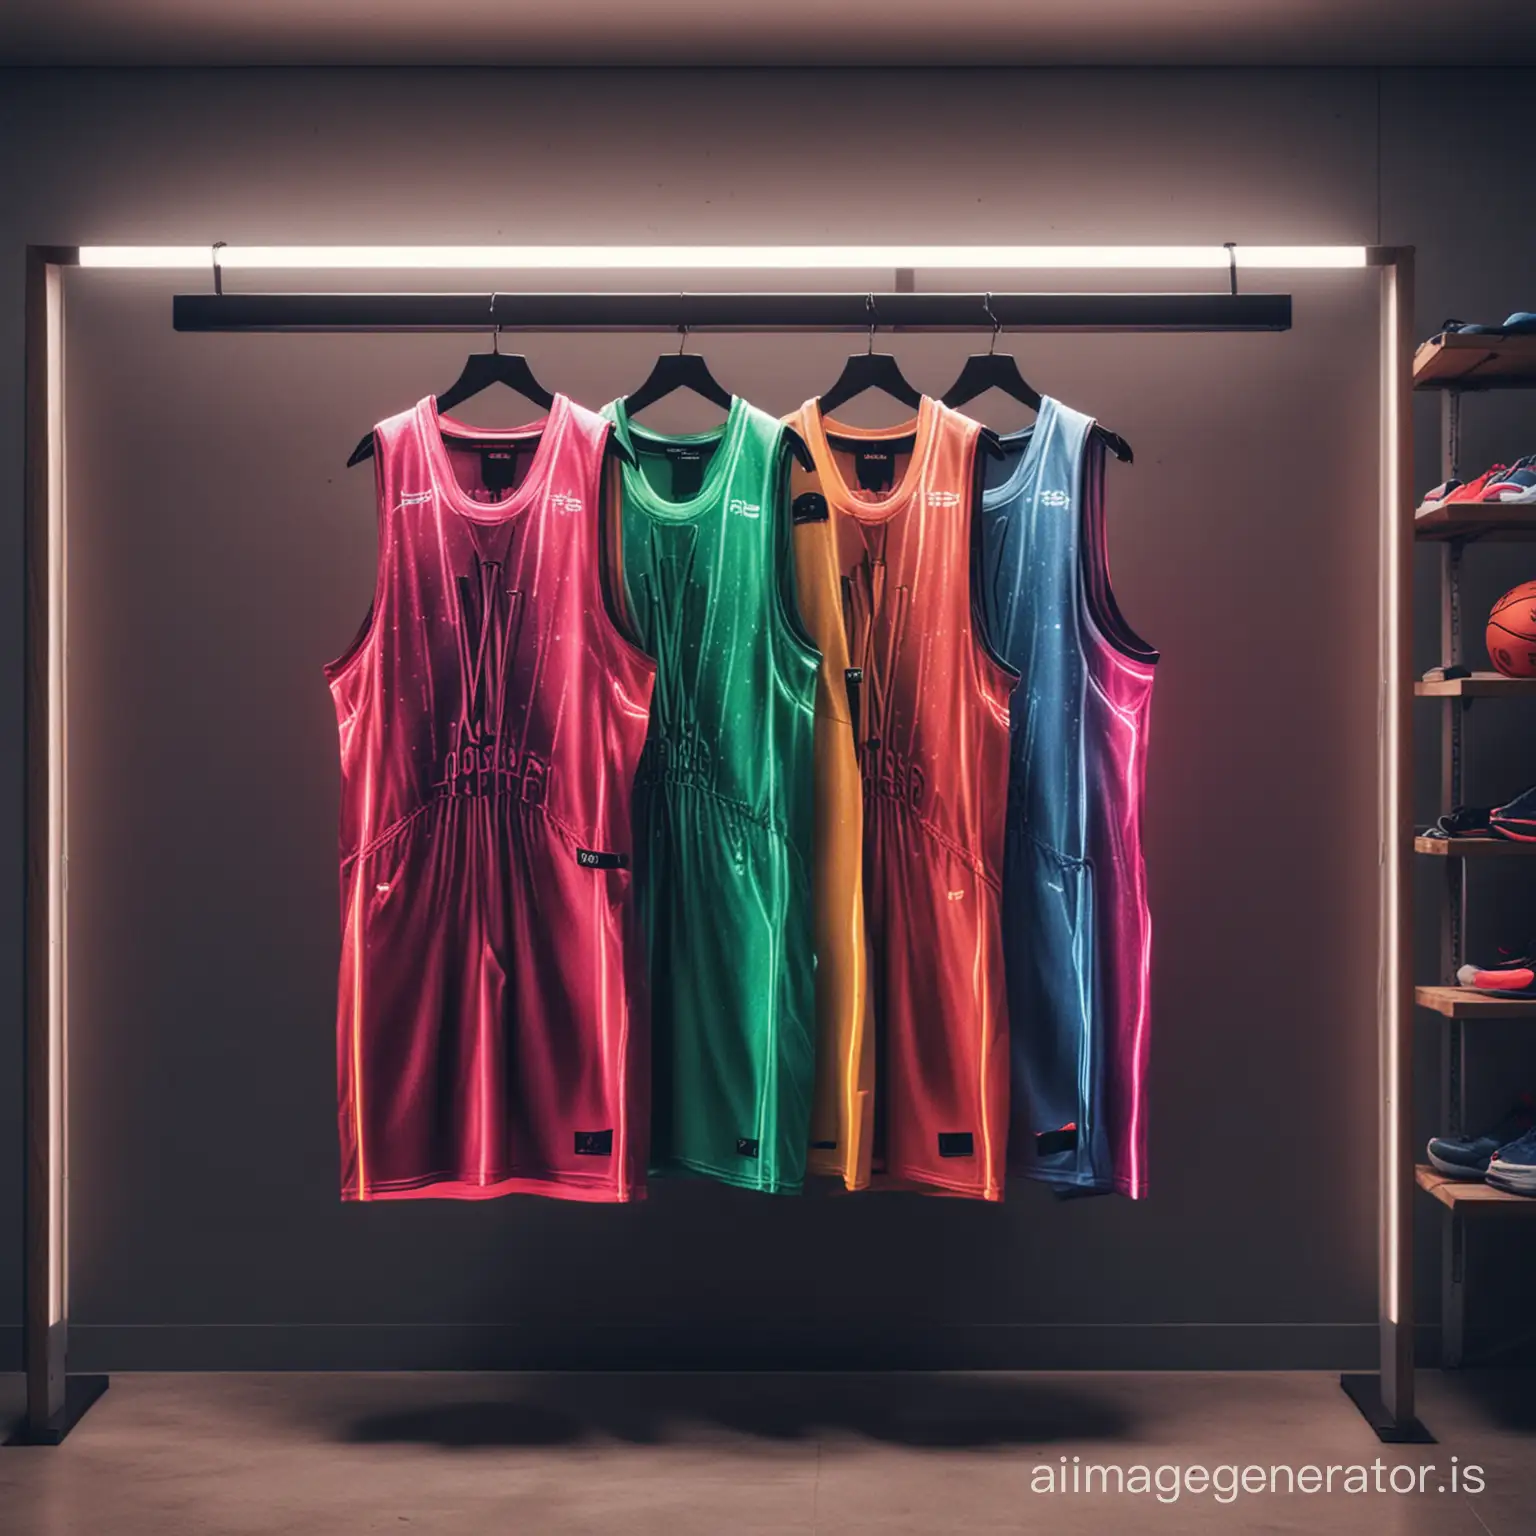 Futuristic-Neon-Basketball-Jerseys-Hanging-in-Illuminated-Closet